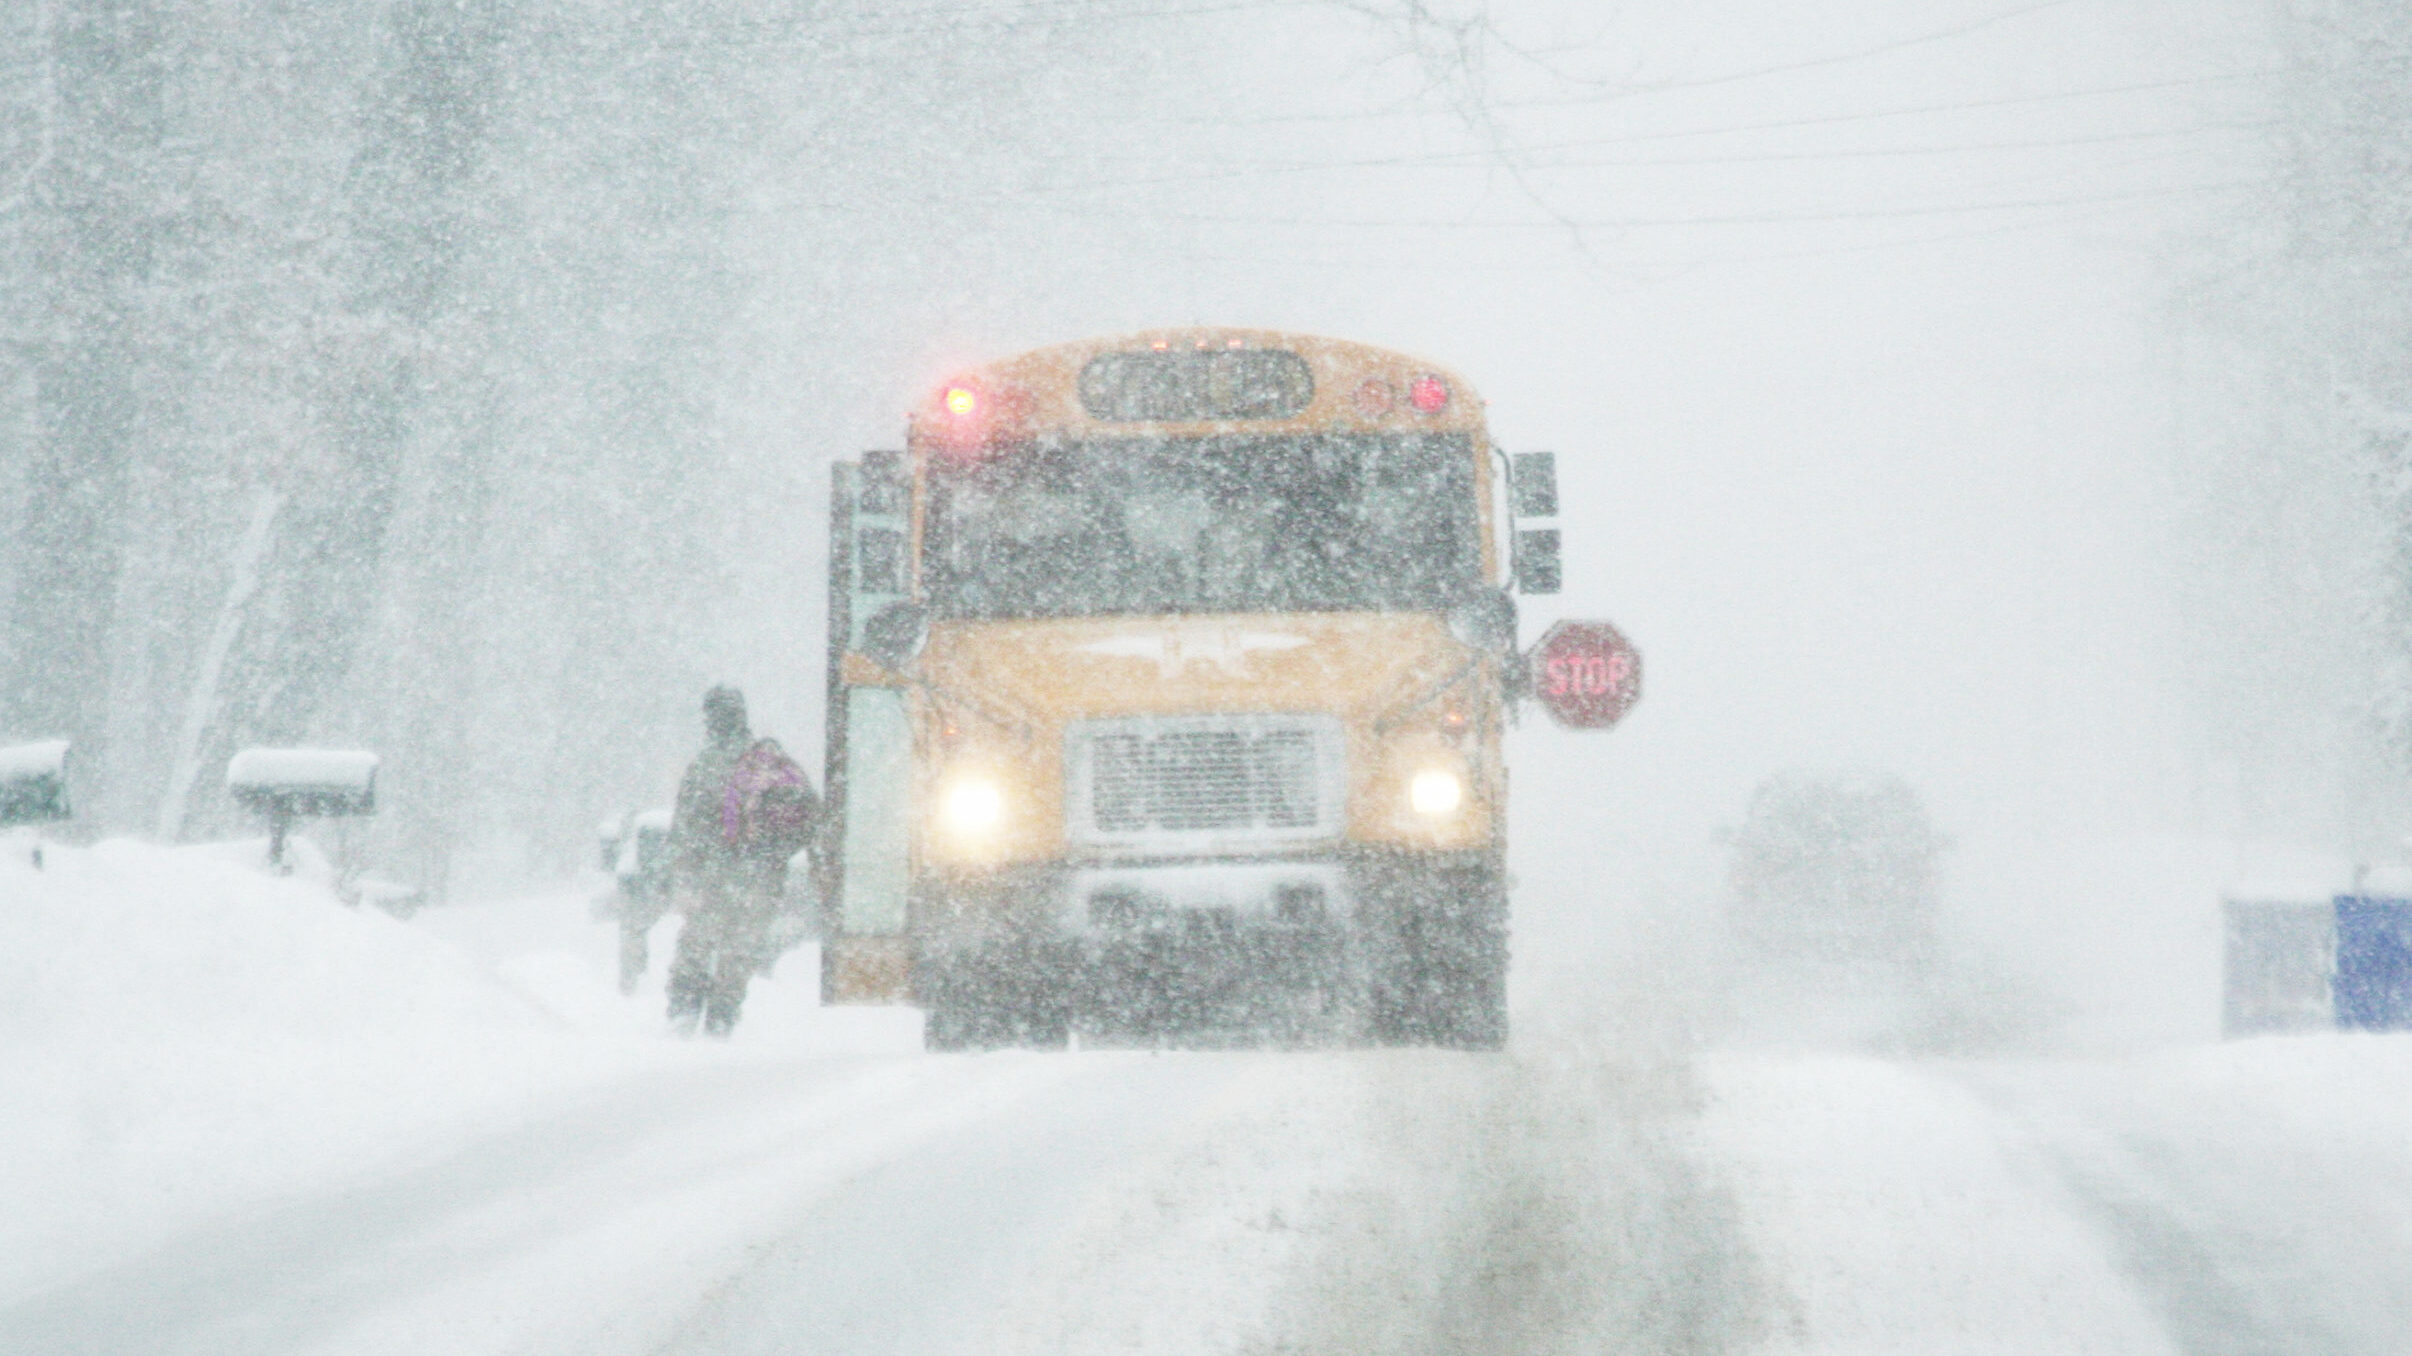 School bus snowy weather...